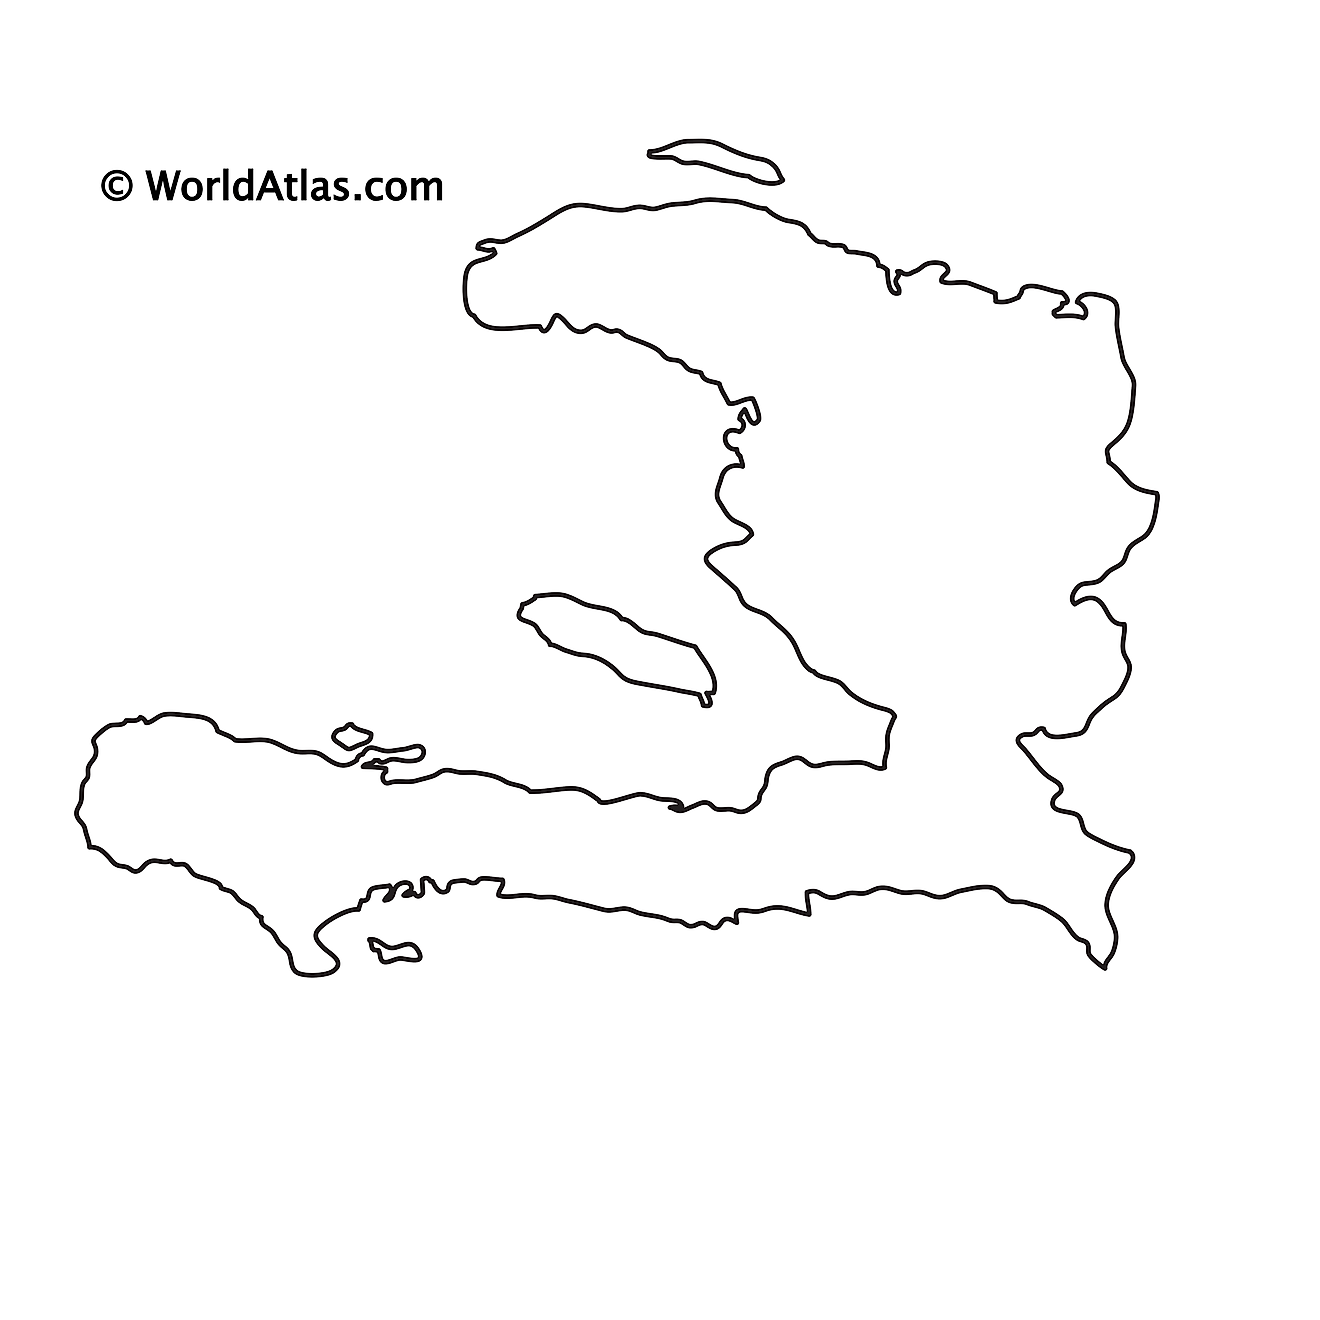 Blank Outline Map of Haiti